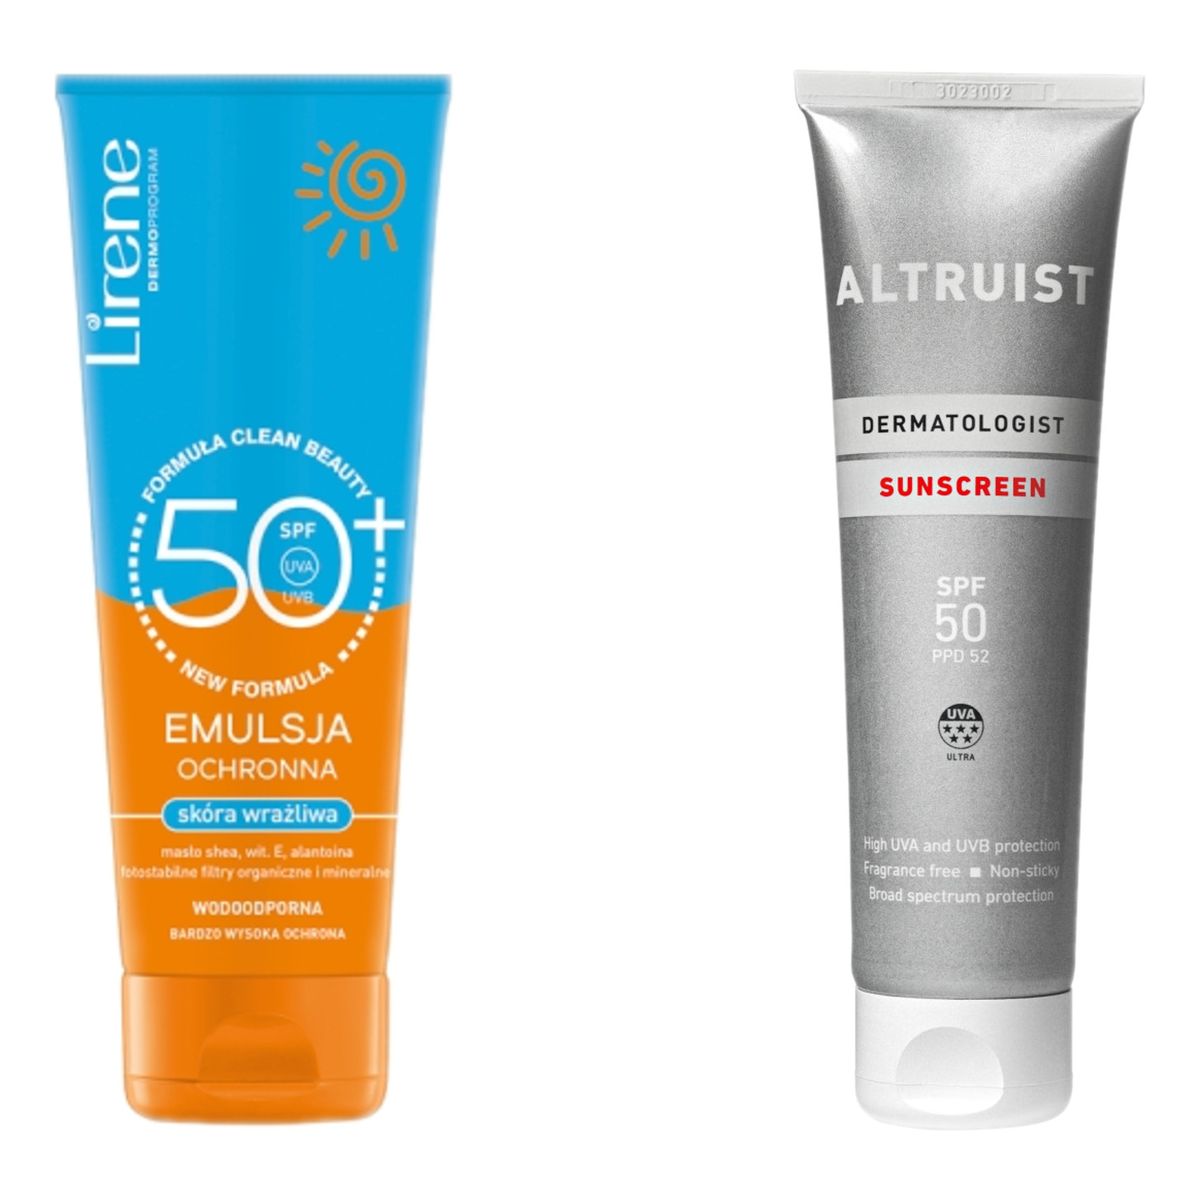 Altruist Dermatologist Sunscreen SPF 50 Krem przeciwsłoneczny ochronny z filtrami 100ml + Lirene Emulsja ochronna 120ml